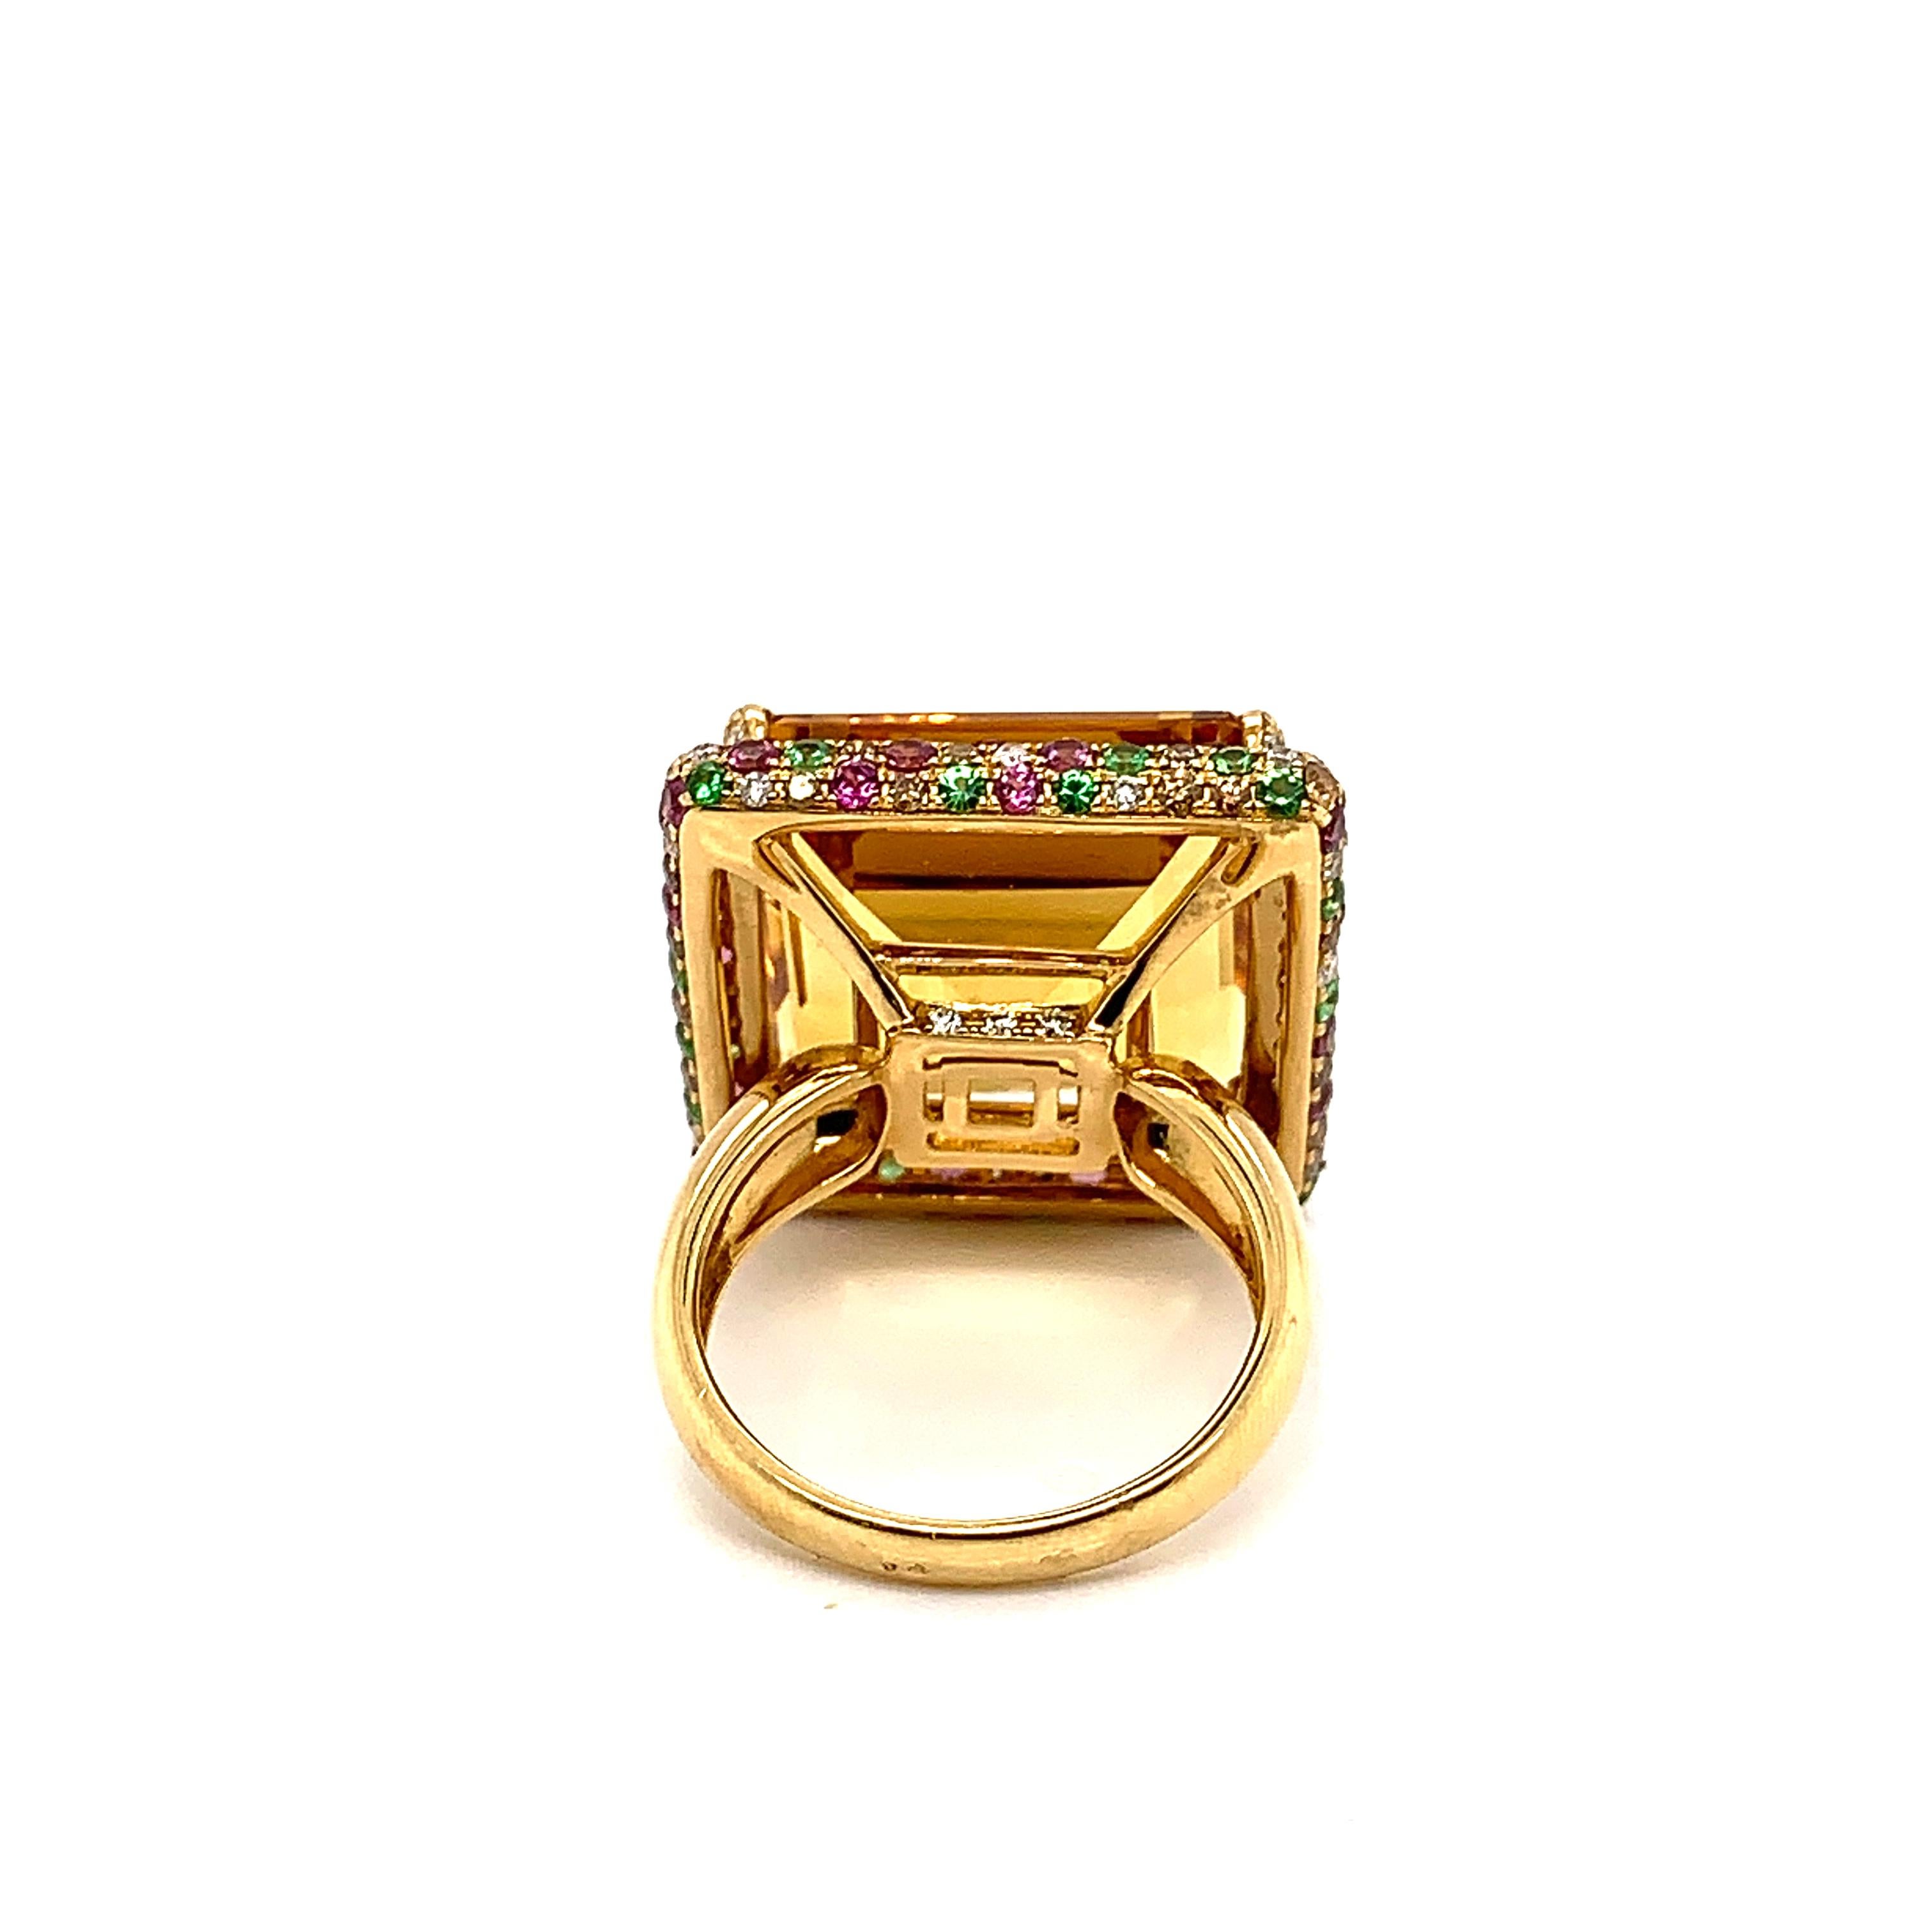 Emerald Cut 21.73 Carat Octagon Shaped Honey Quartz Ring in 18 Karat Gold with Diamonds